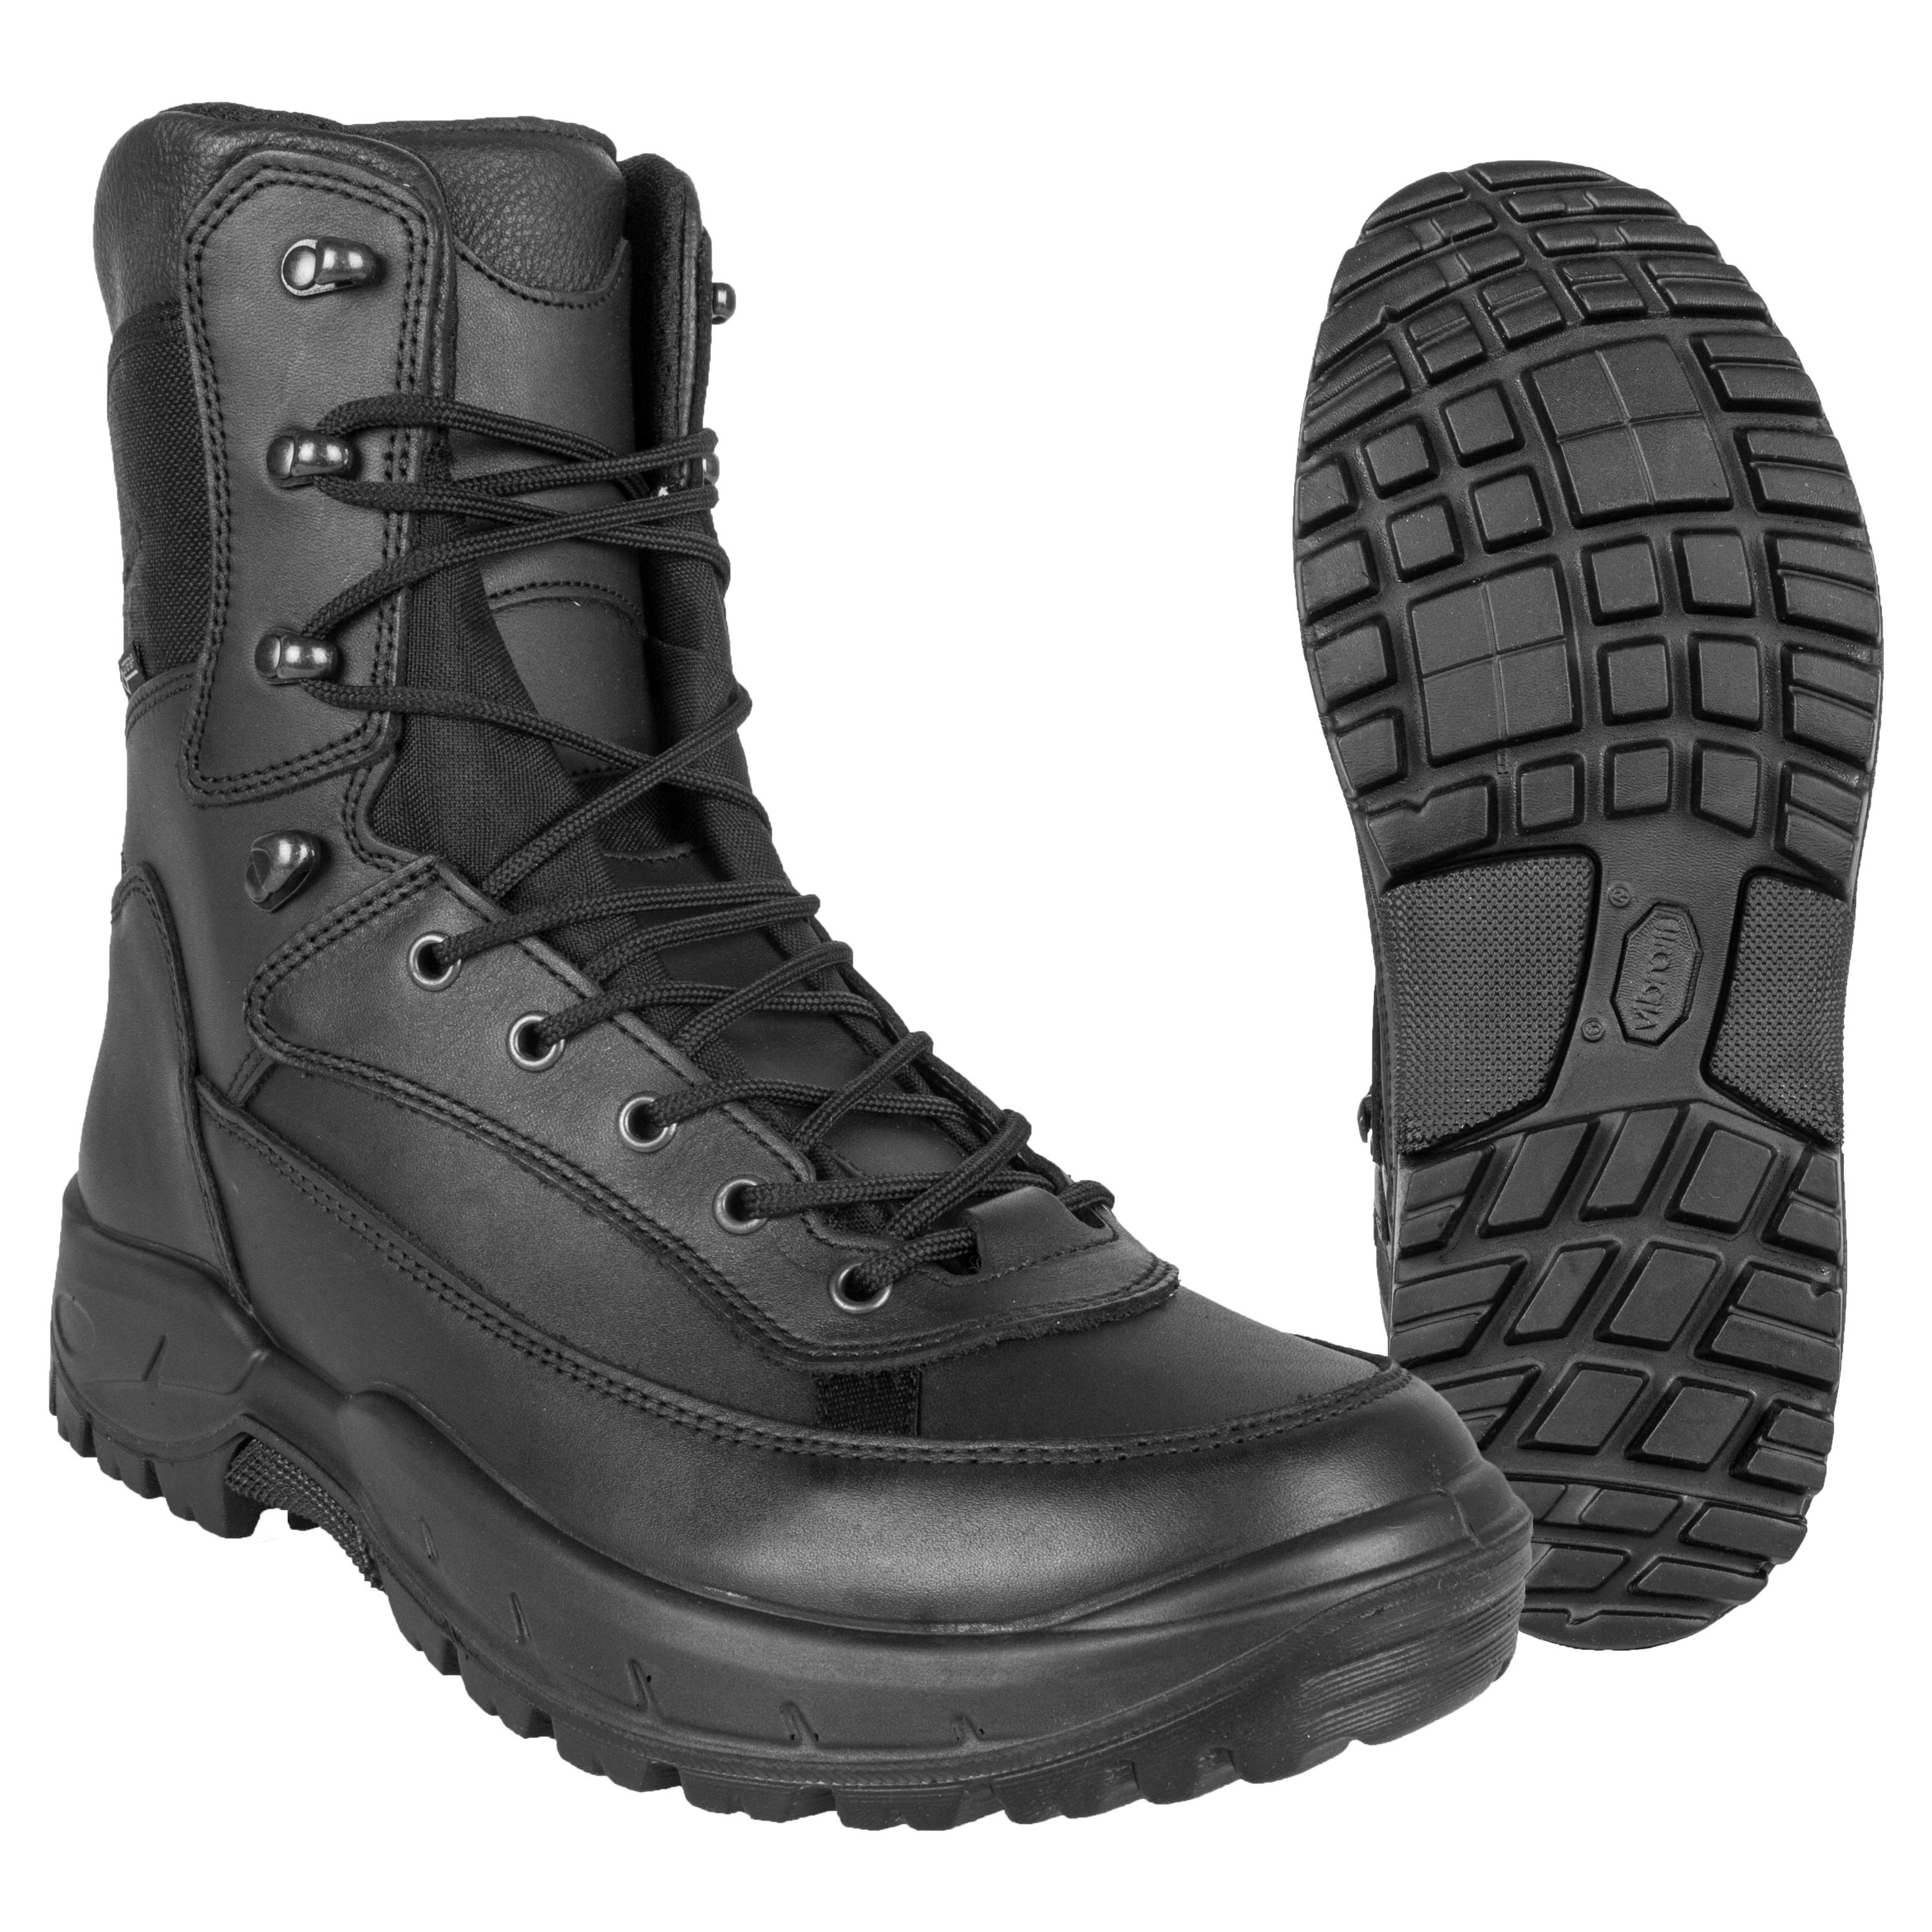 Zullen Picasso Ongehoorzaamheid Purchase the LOWA Boots Recon GTX TF black by ASMC